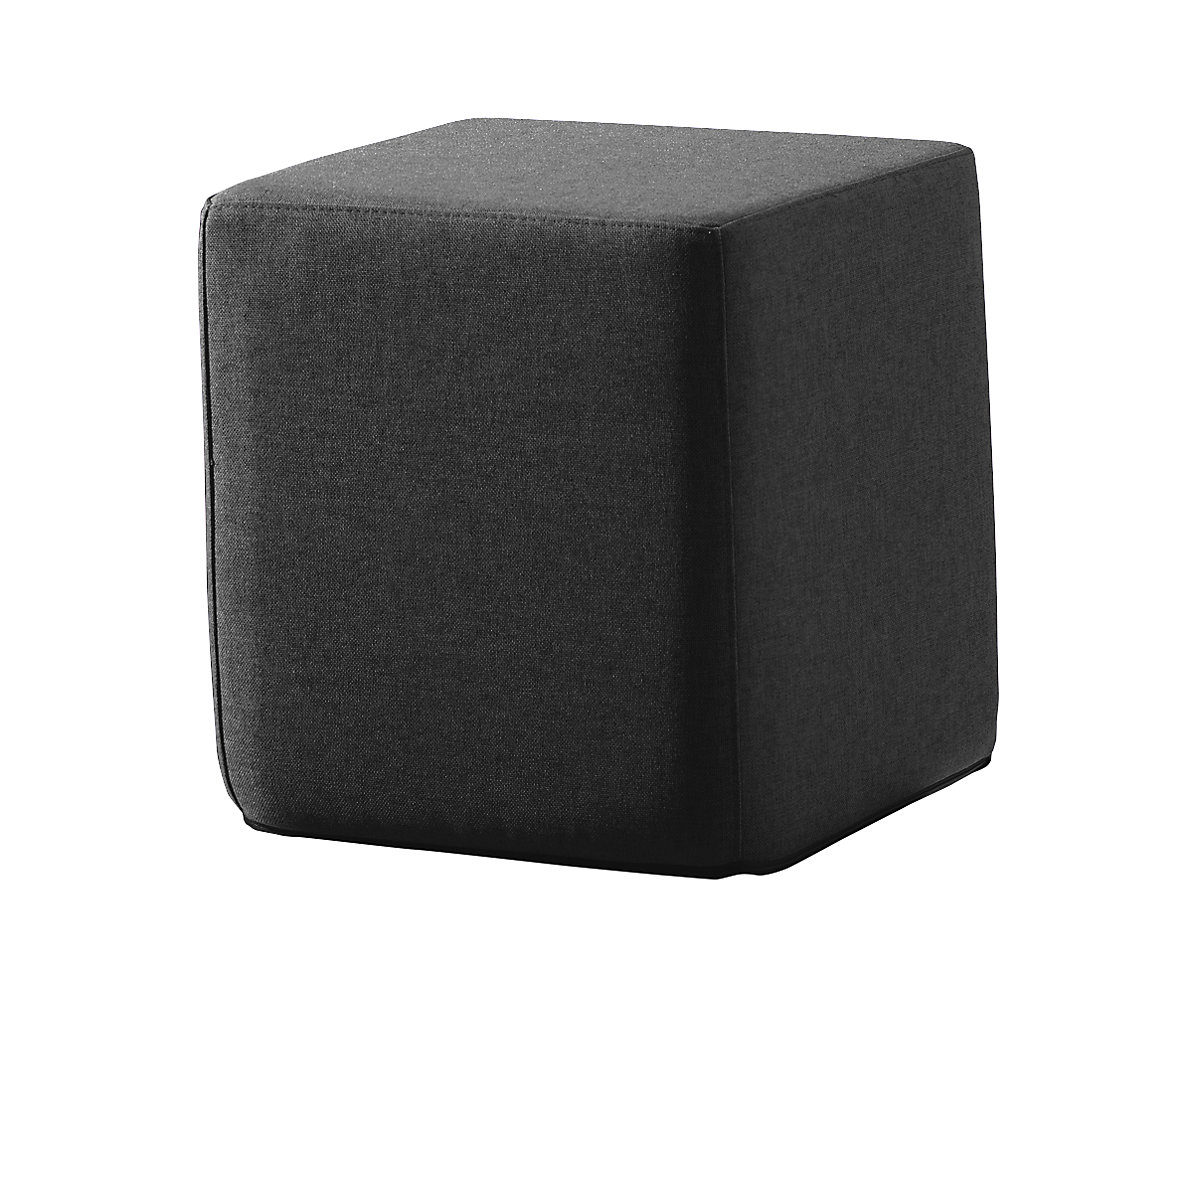 SITTING cube seat